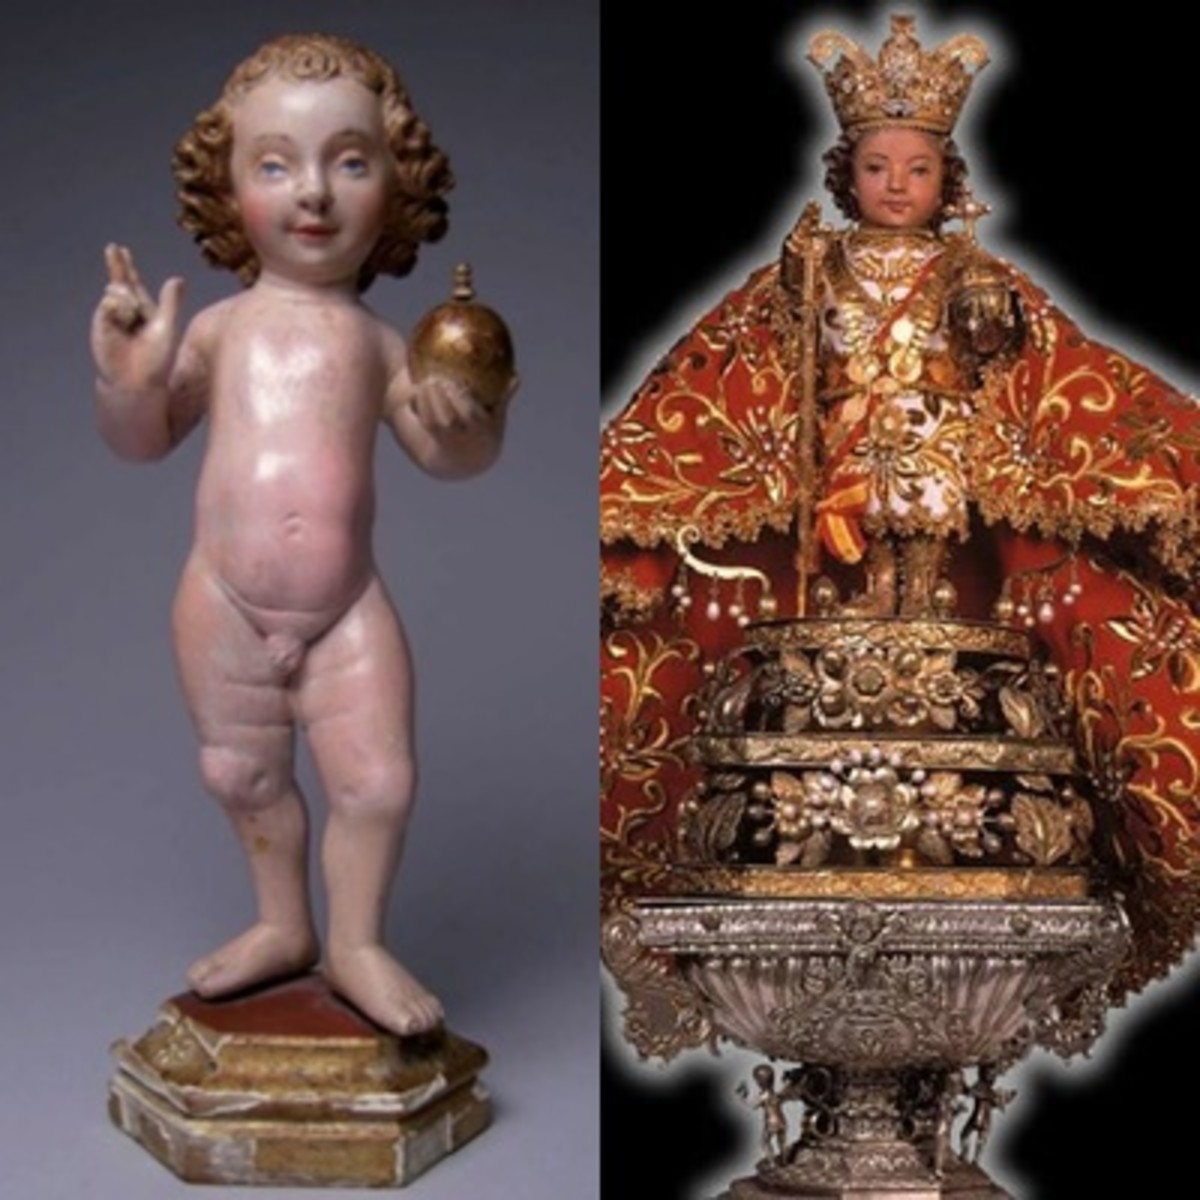 The Infant Jesus of Mechelen, and the original Santo Niño de Cebu given by Pigafetta.